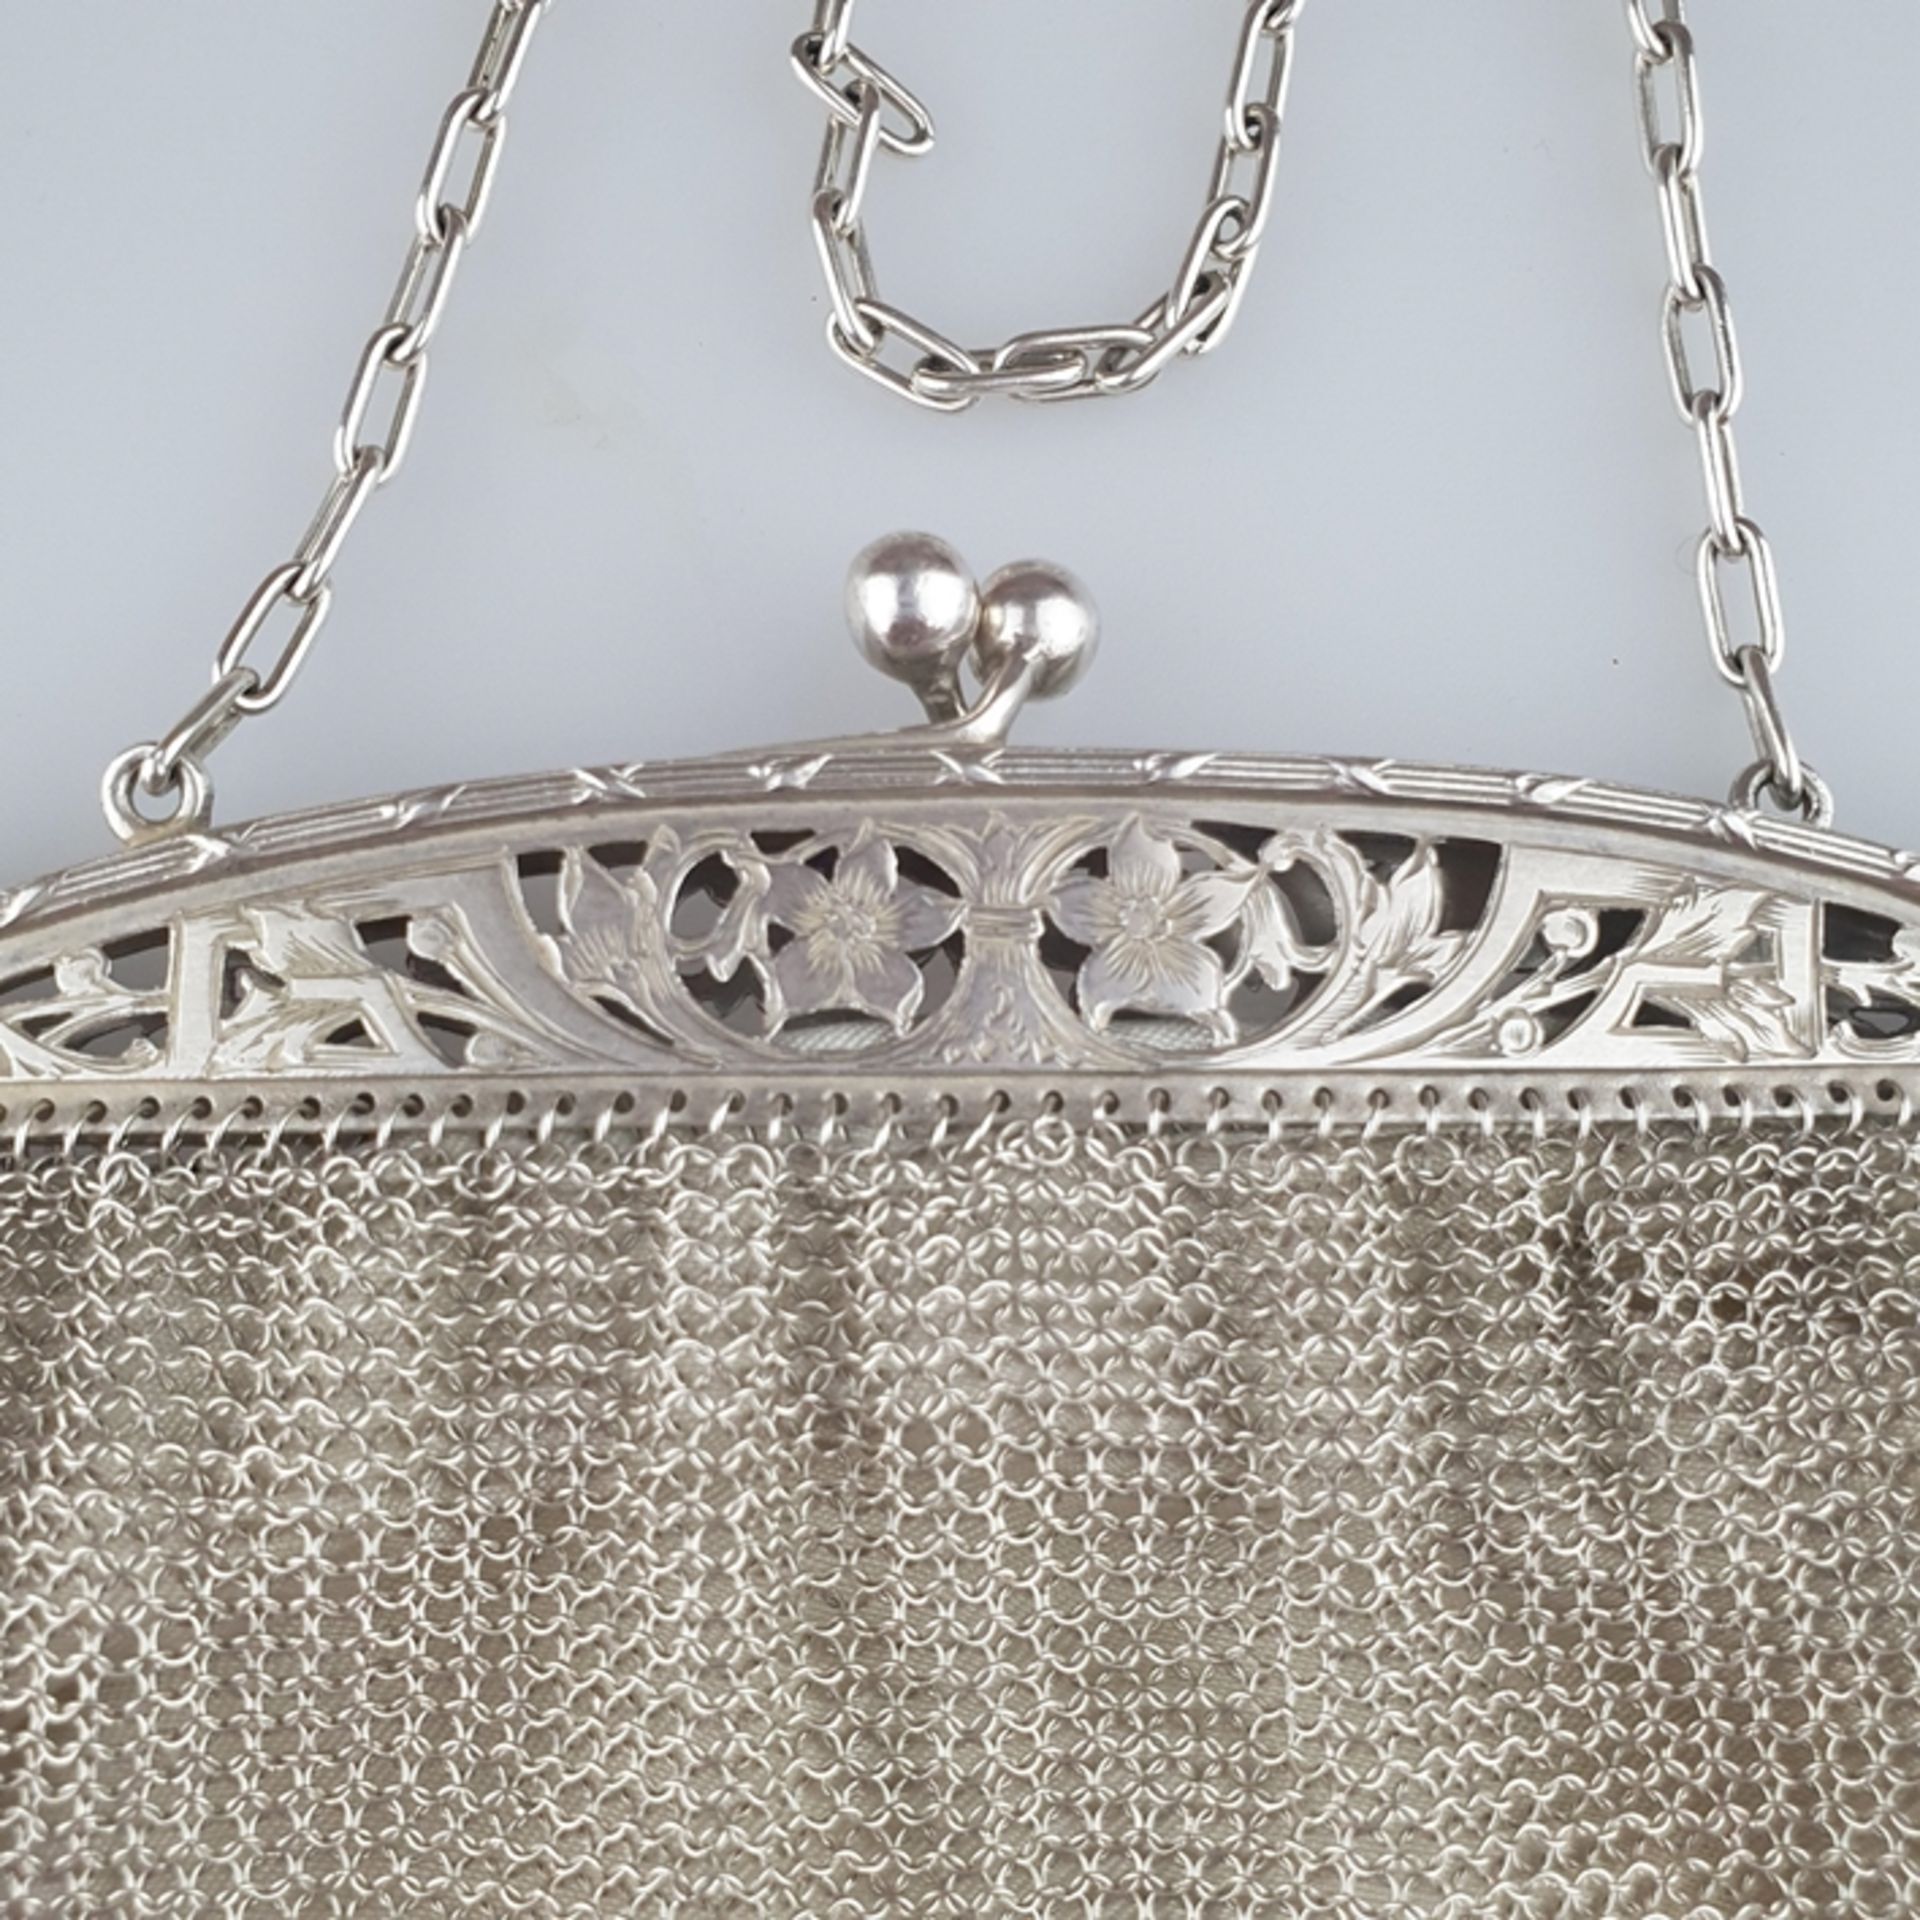 Kettentasche - um 1900, Silber, rechteckige Form aus fein verwirkten Kettenglie - Image 4 of 6